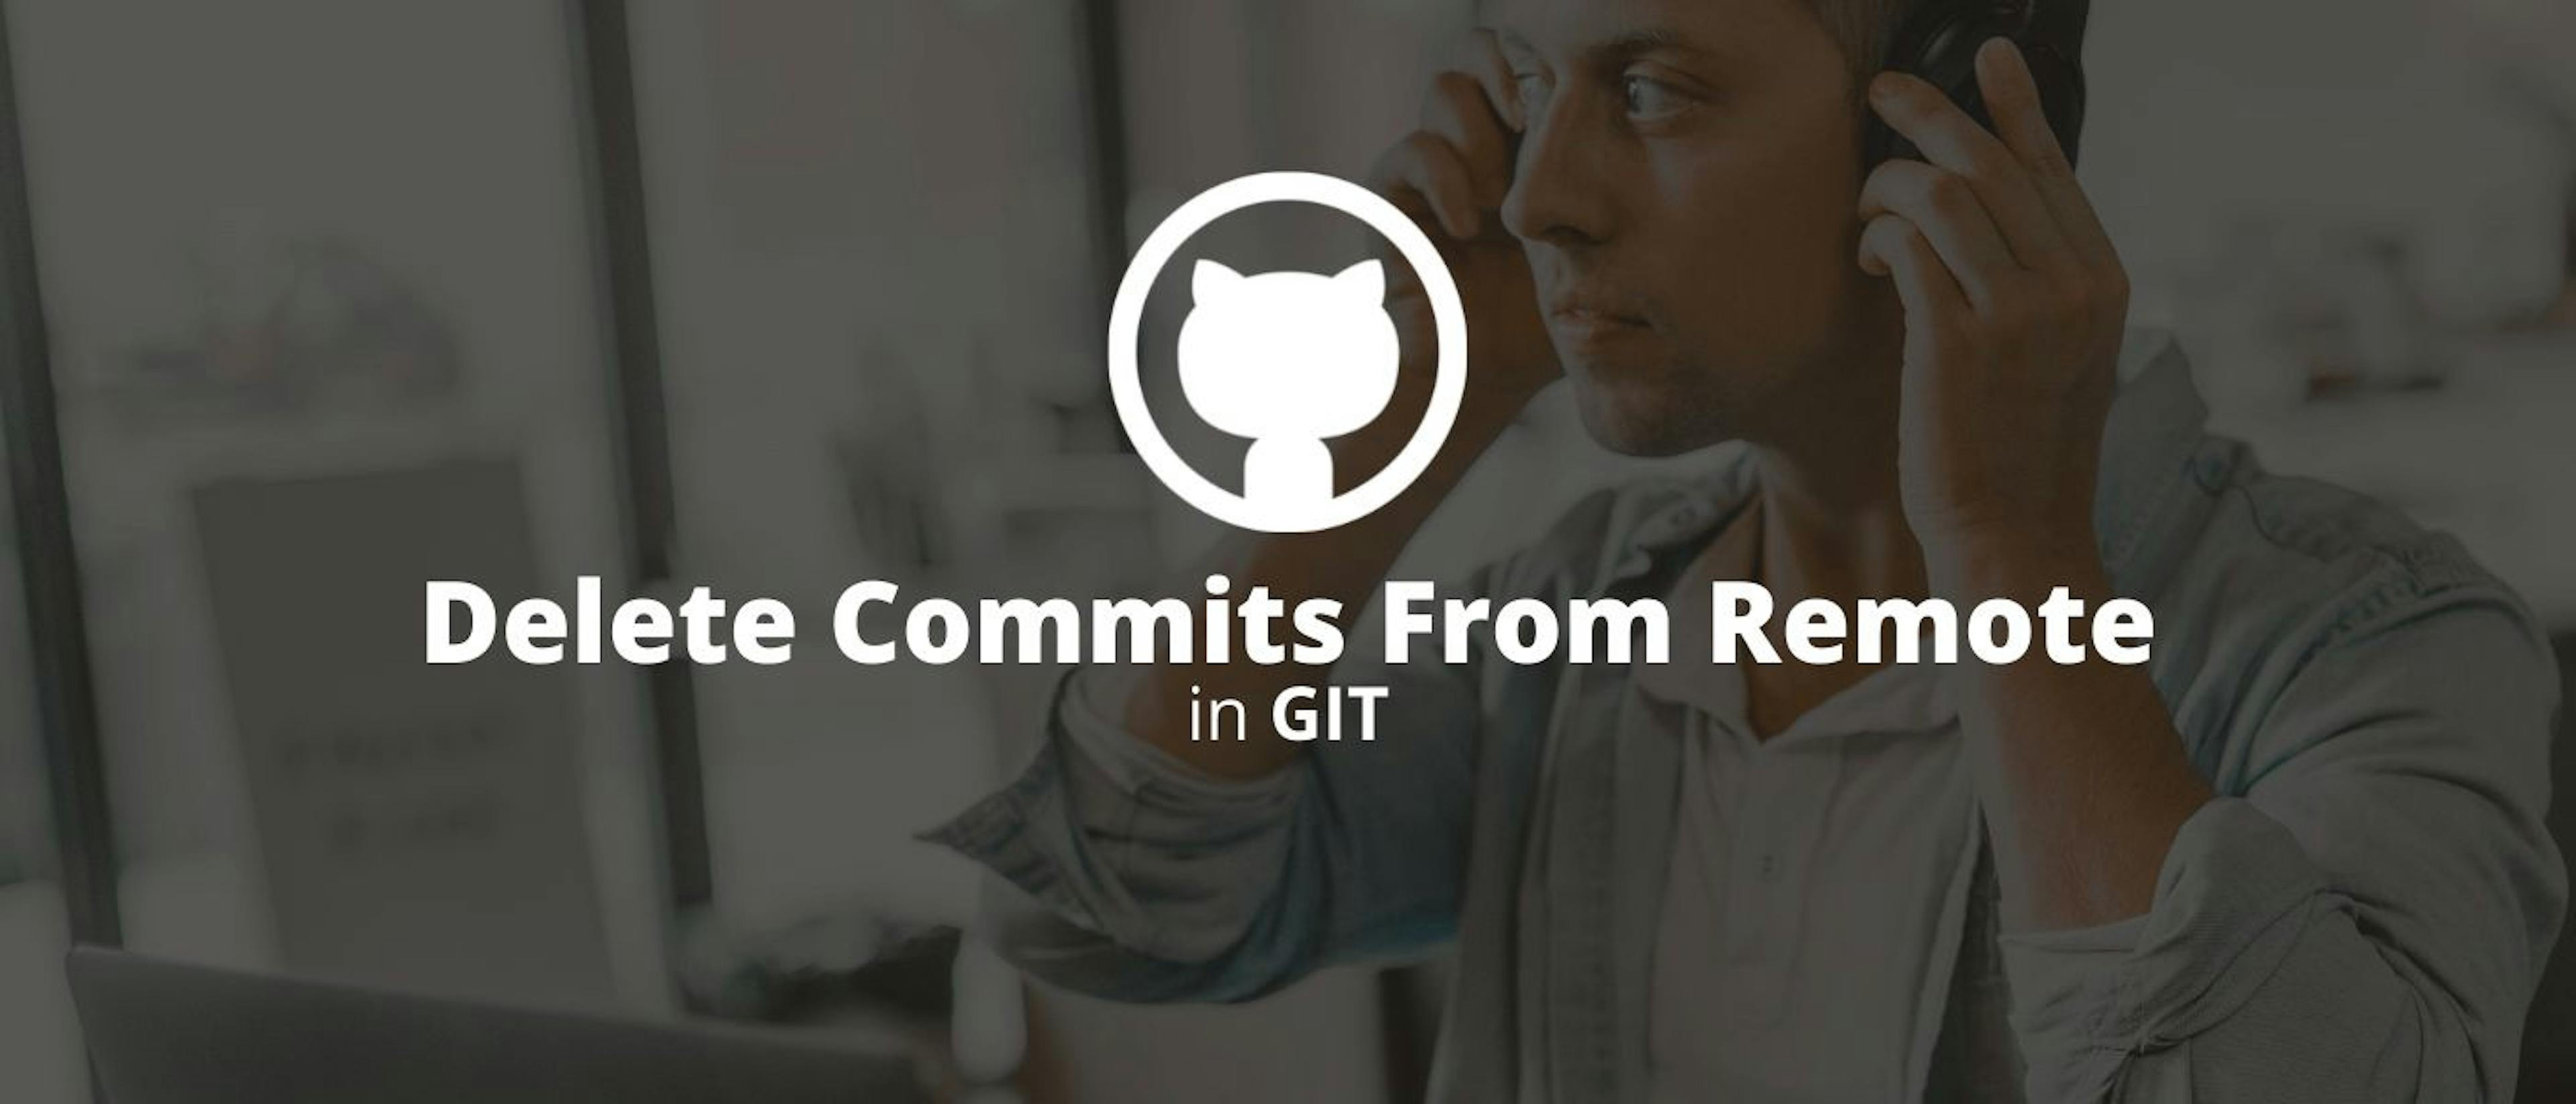 featured image - Como excluir commits remotamente no Git